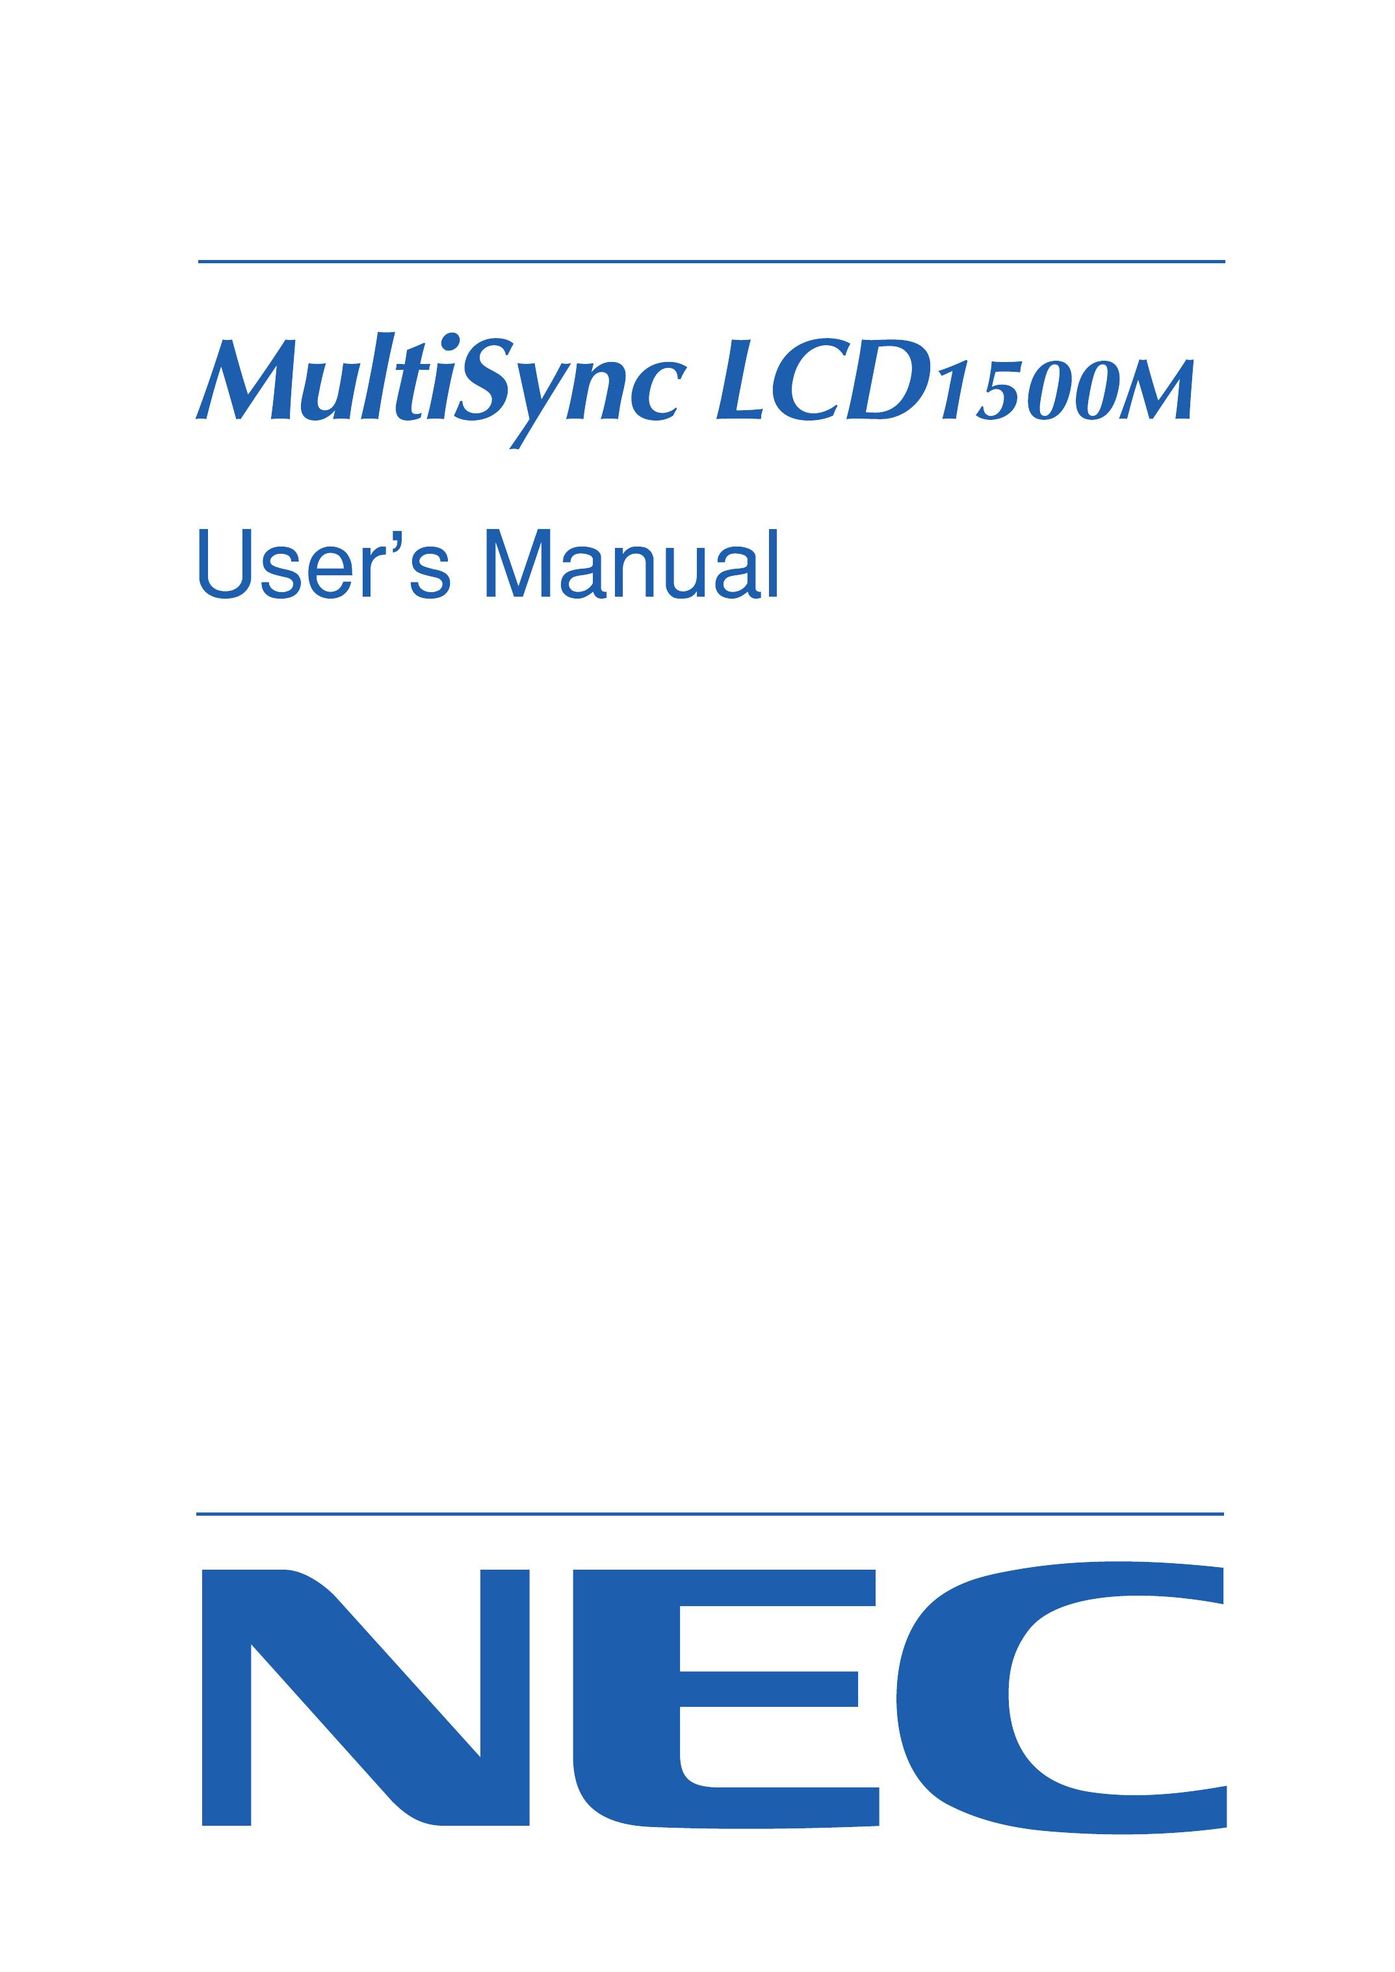 NEC LA-1524HMW Flat Panel Television User Manual